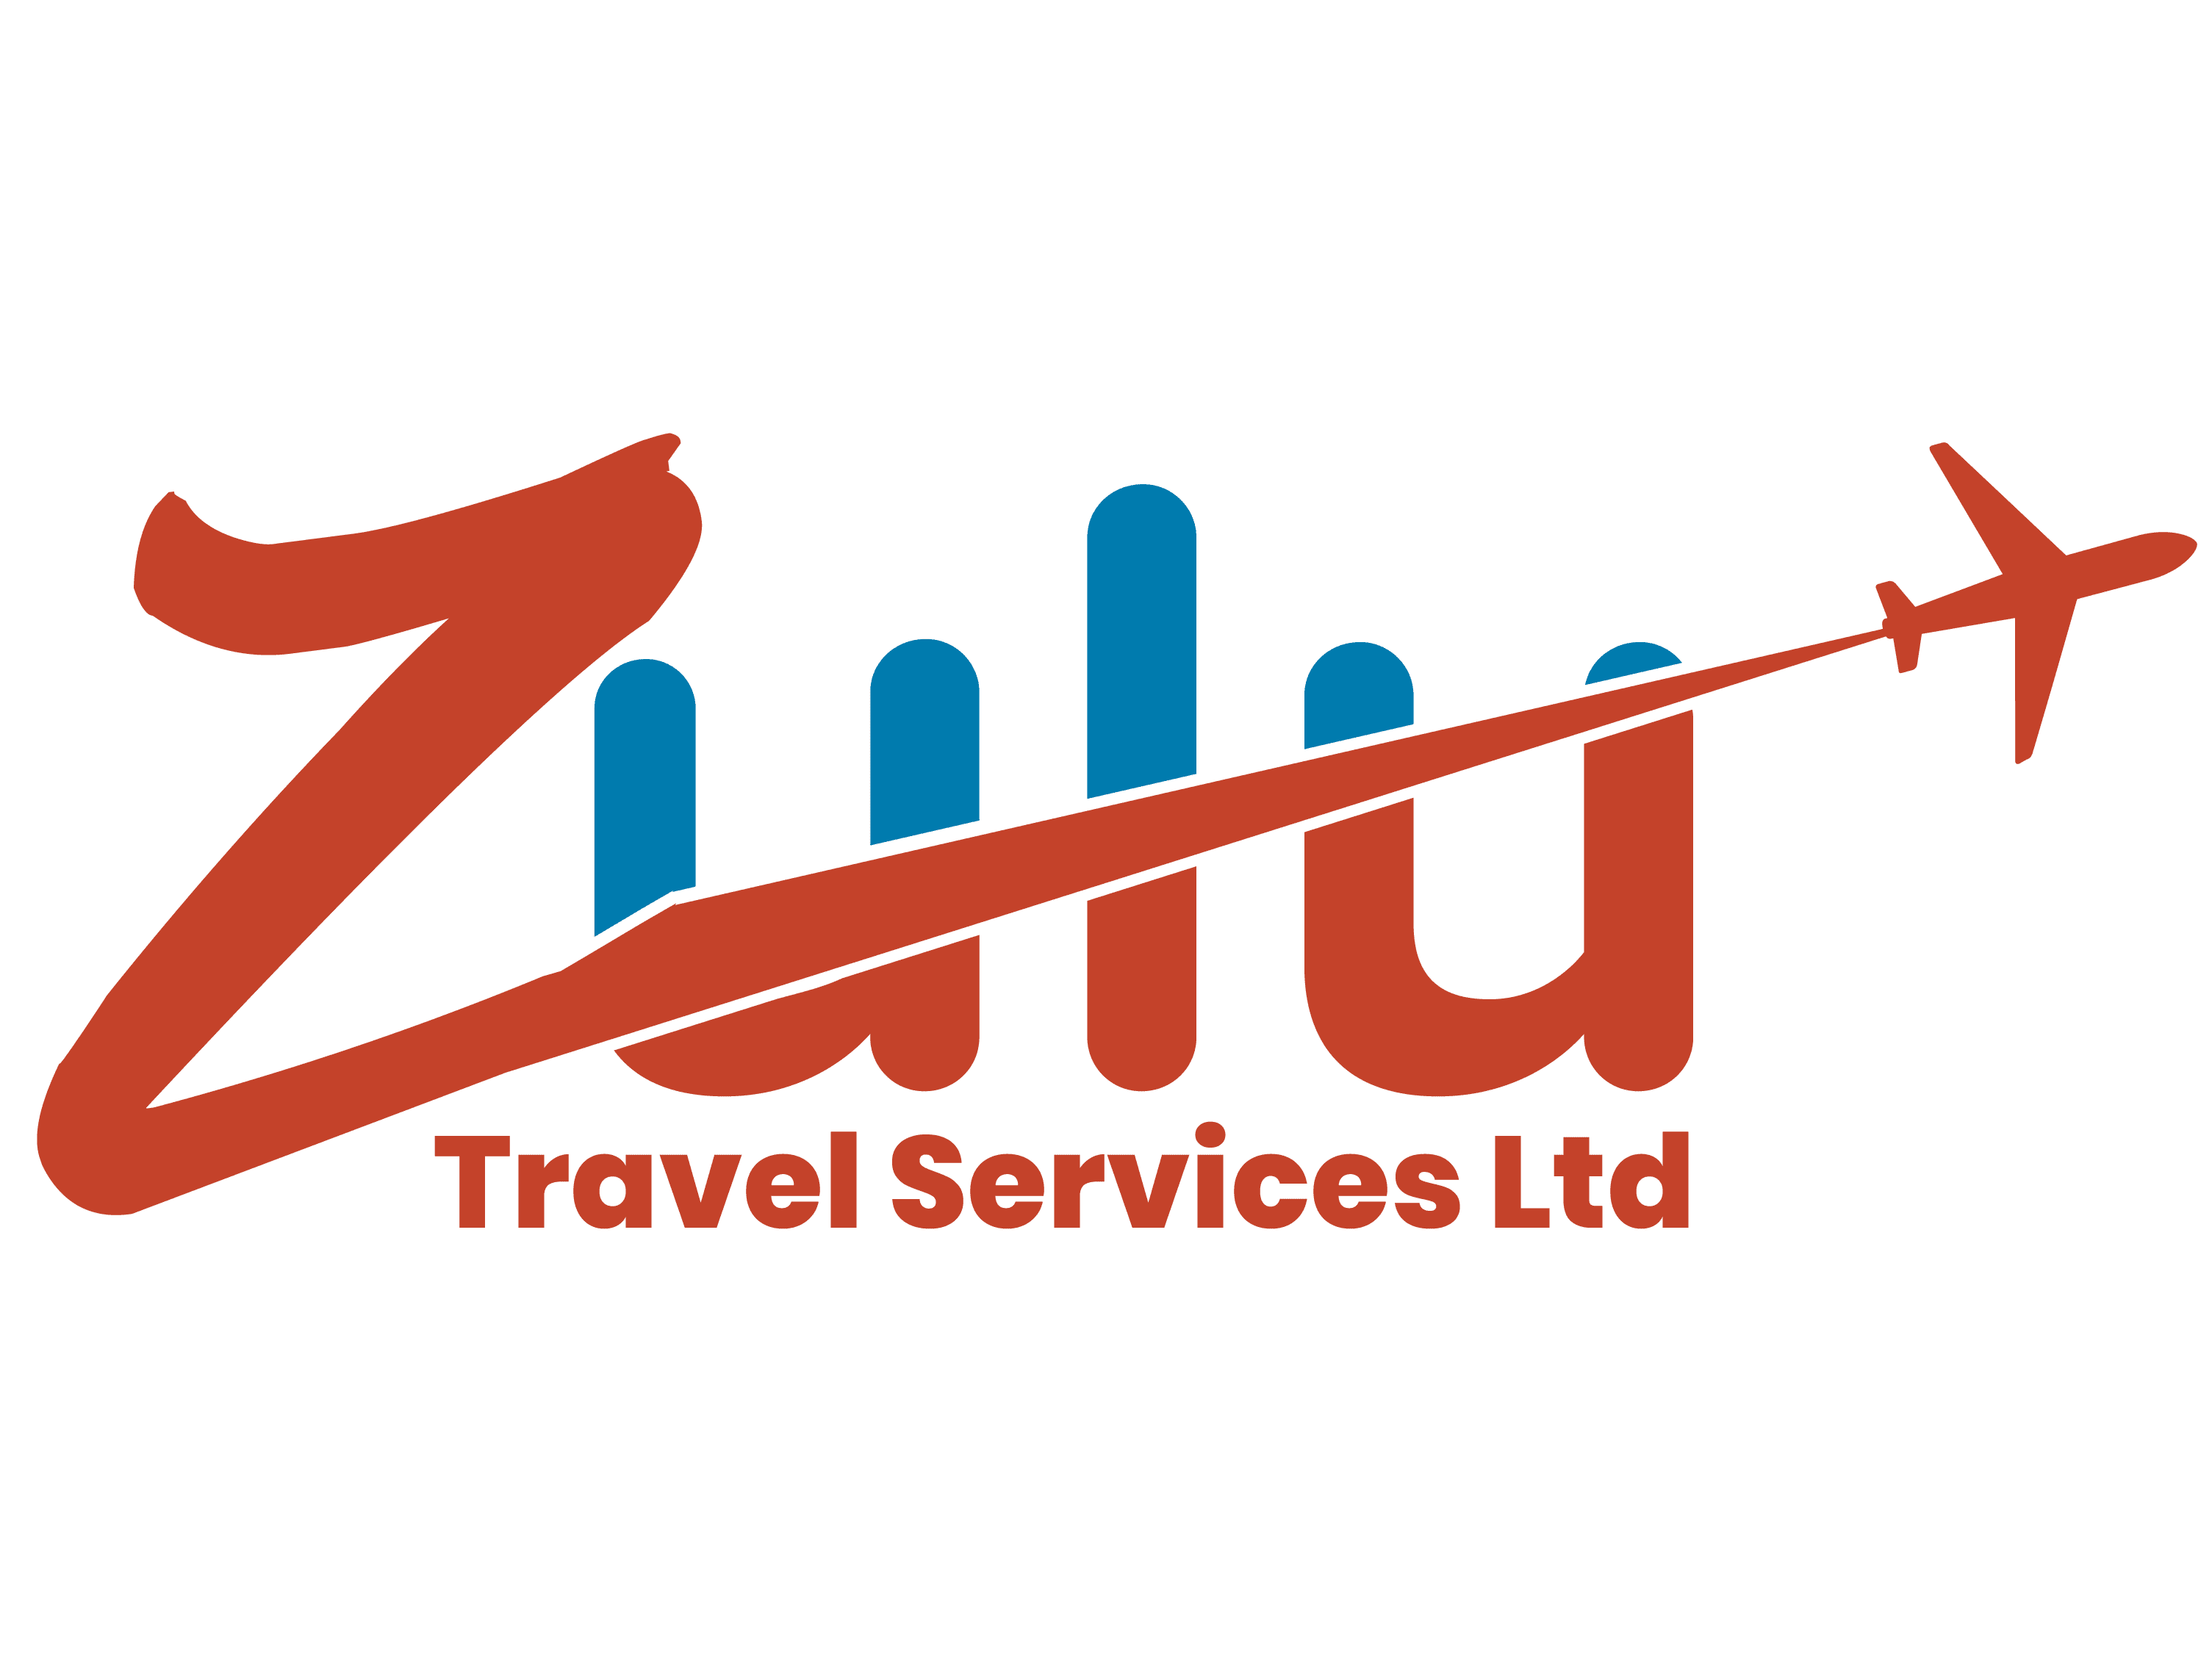 zulu travel services ltd